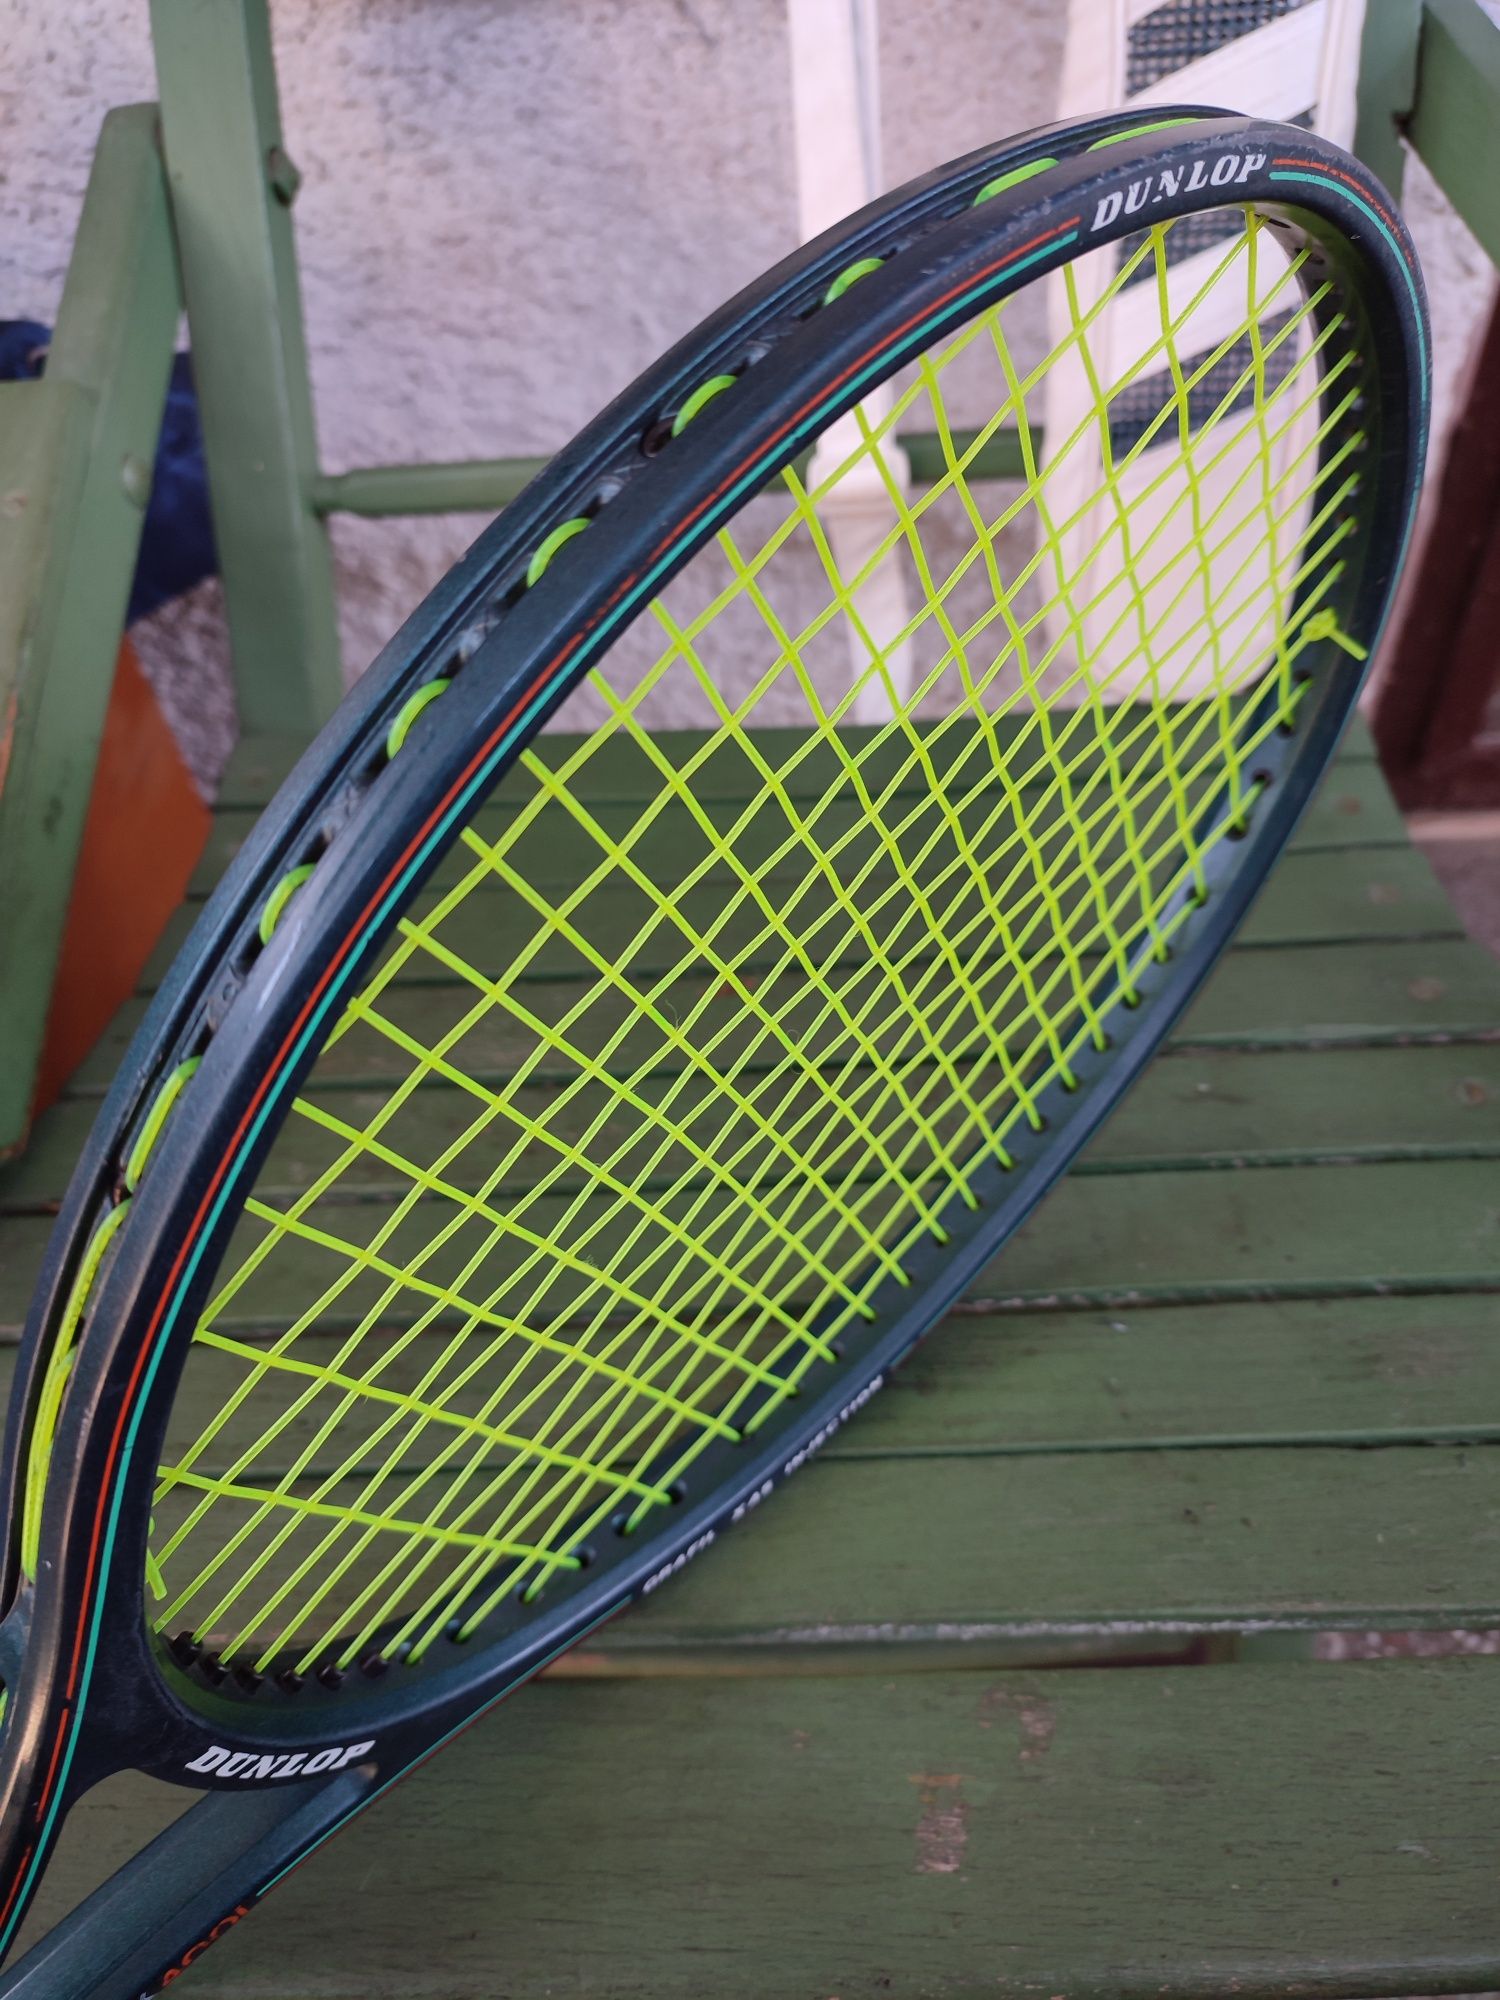 Dunlop Max 400I-Racheta tenis